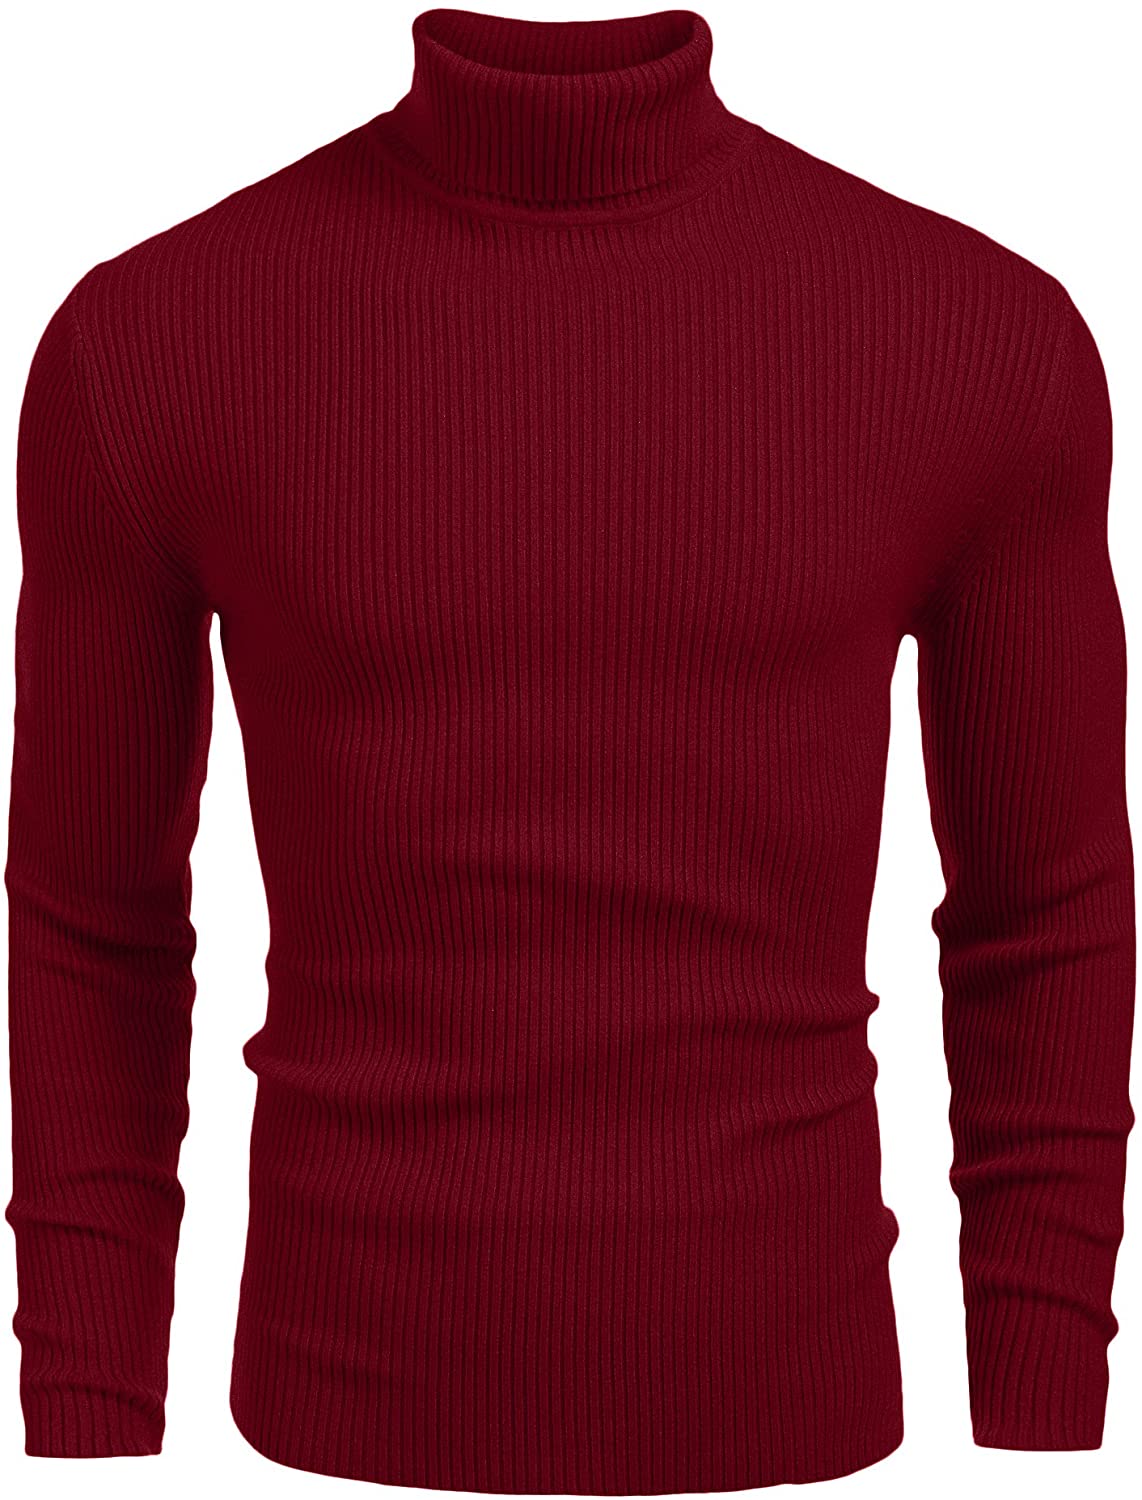 JINIDU Men's Turtleneck Knitted Pullover Slim Fit Basic Ribbed Thermal Sweater 